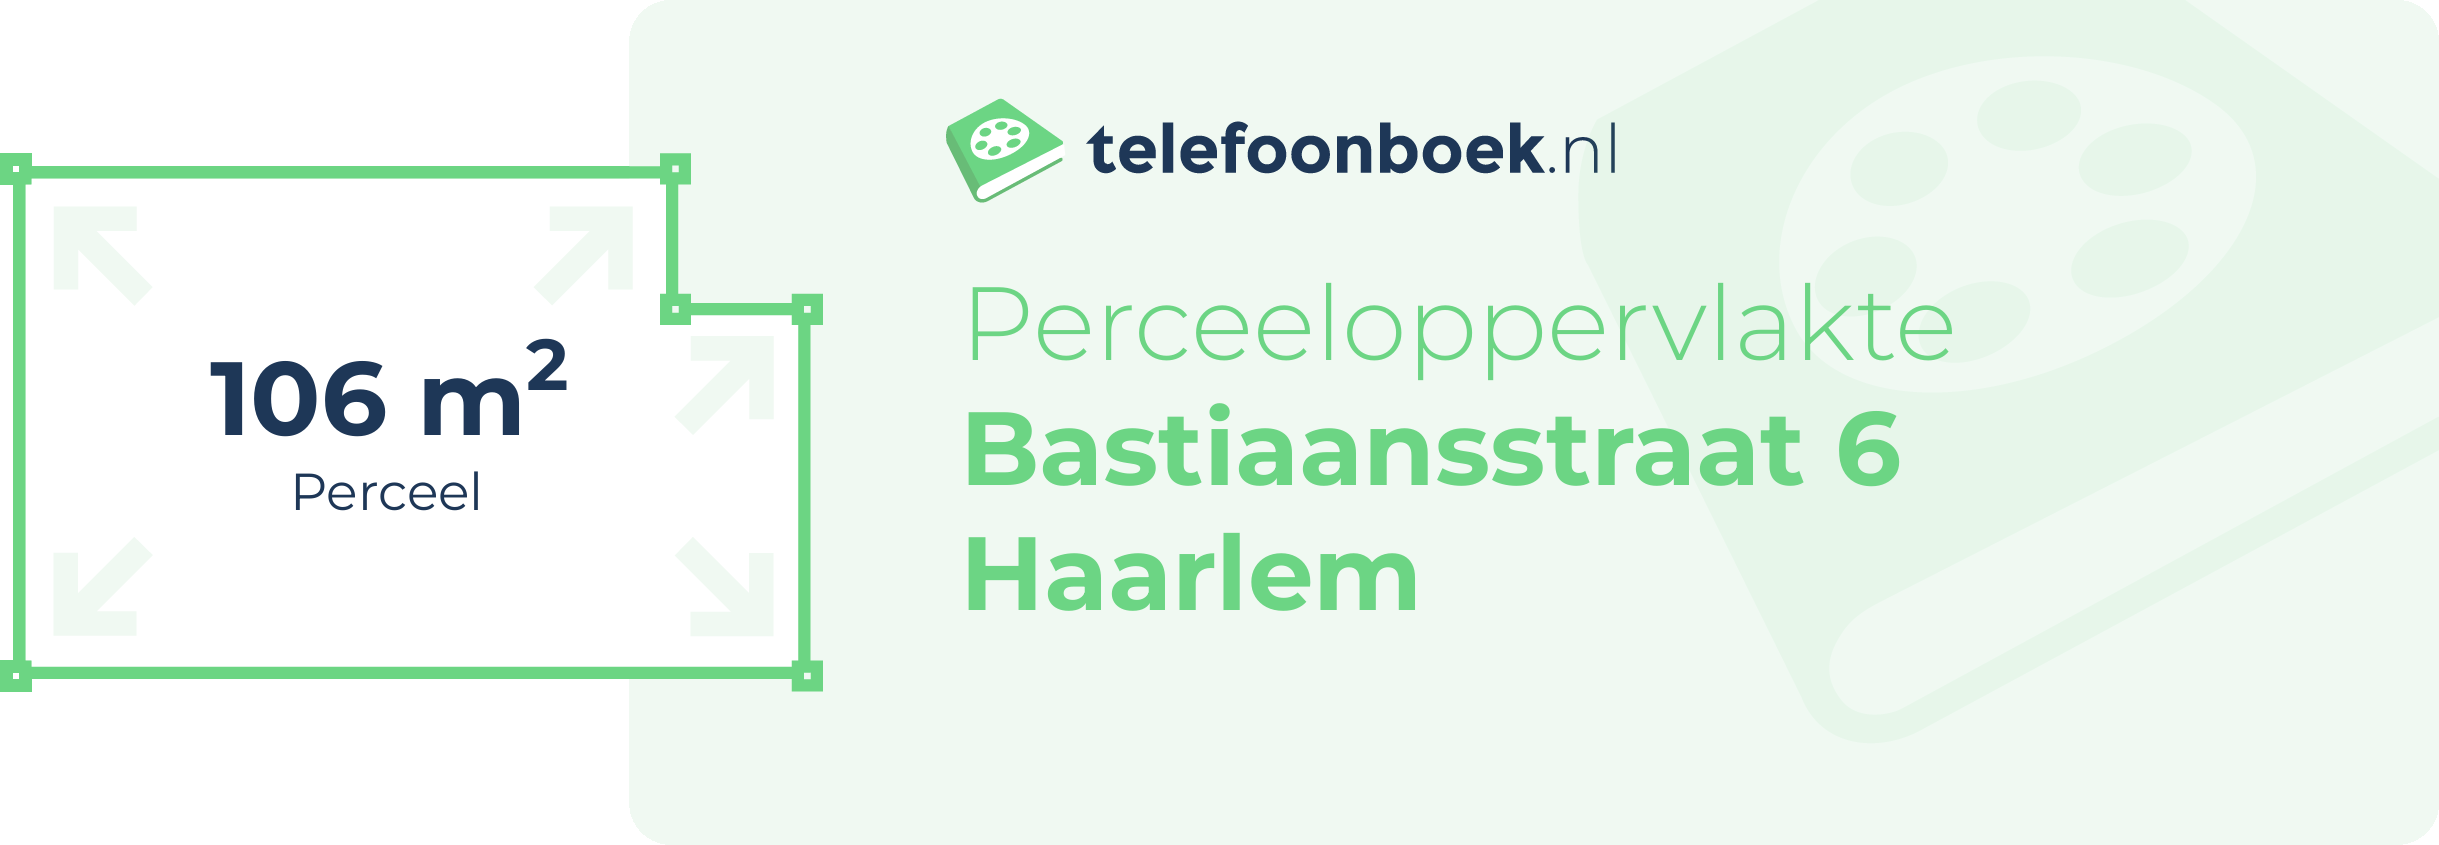 Perceeloppervlakte Bastiaansstraat 6 Haarlem